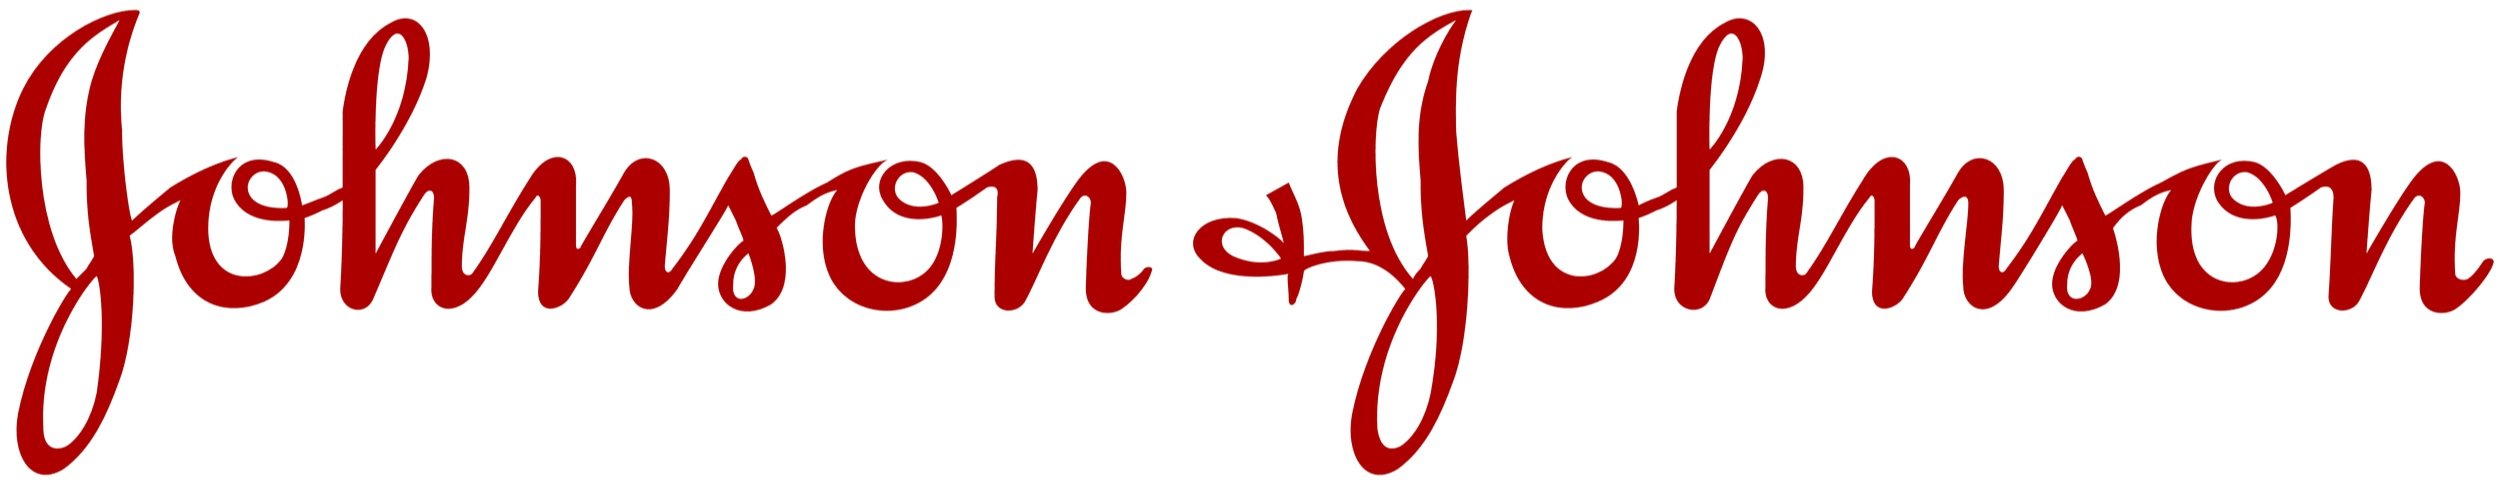 Johnson-and-Johnson-logo.jpg